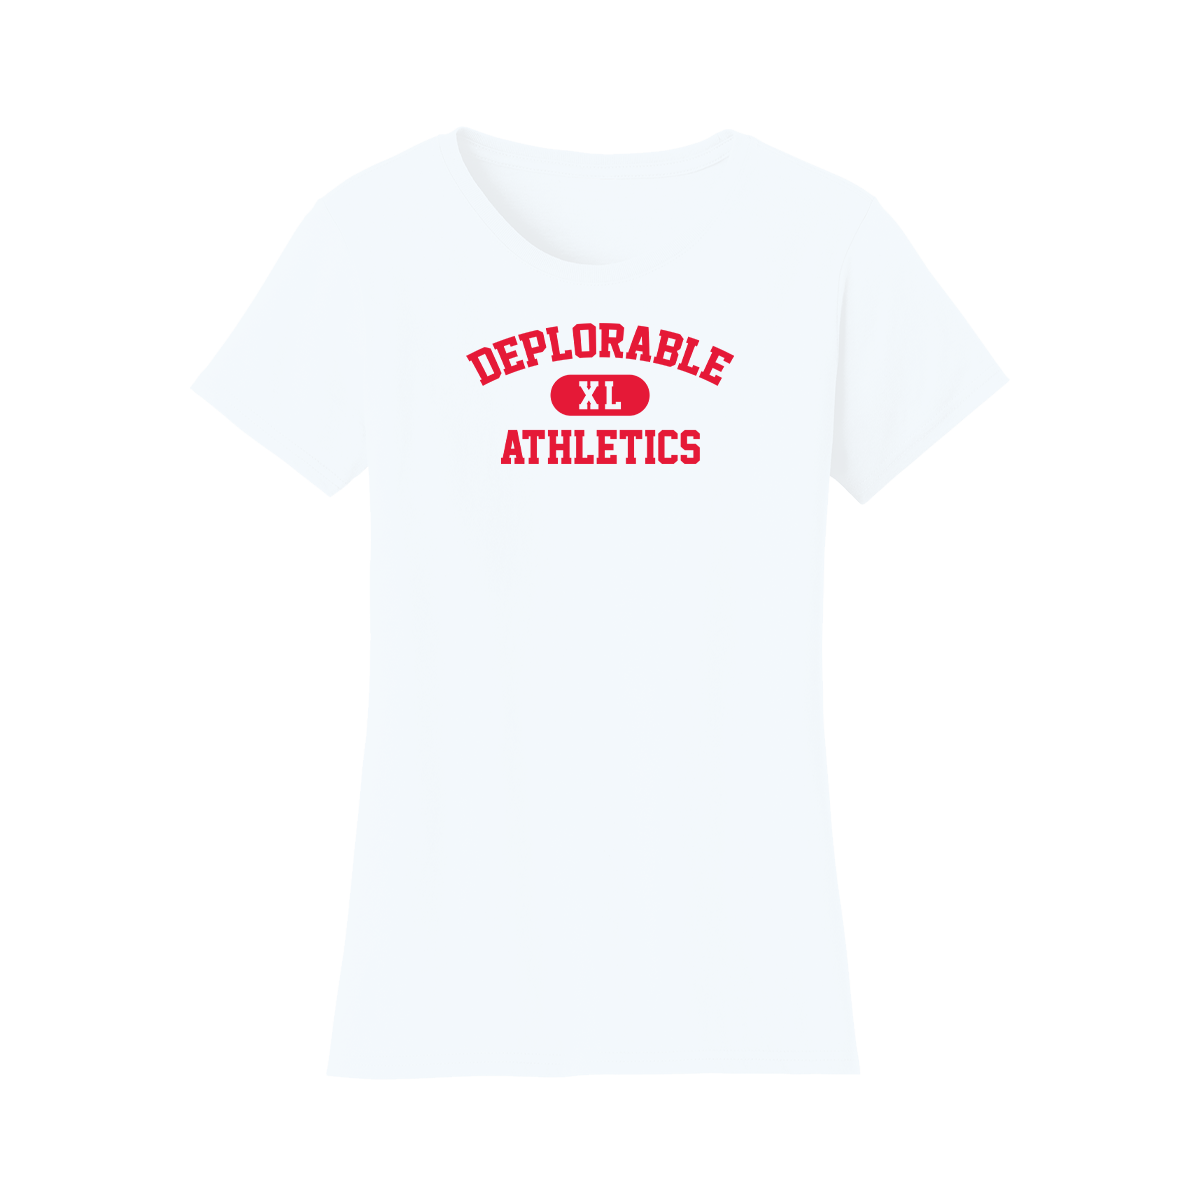 Deplorable Athletics Women’s T-Shirt - White